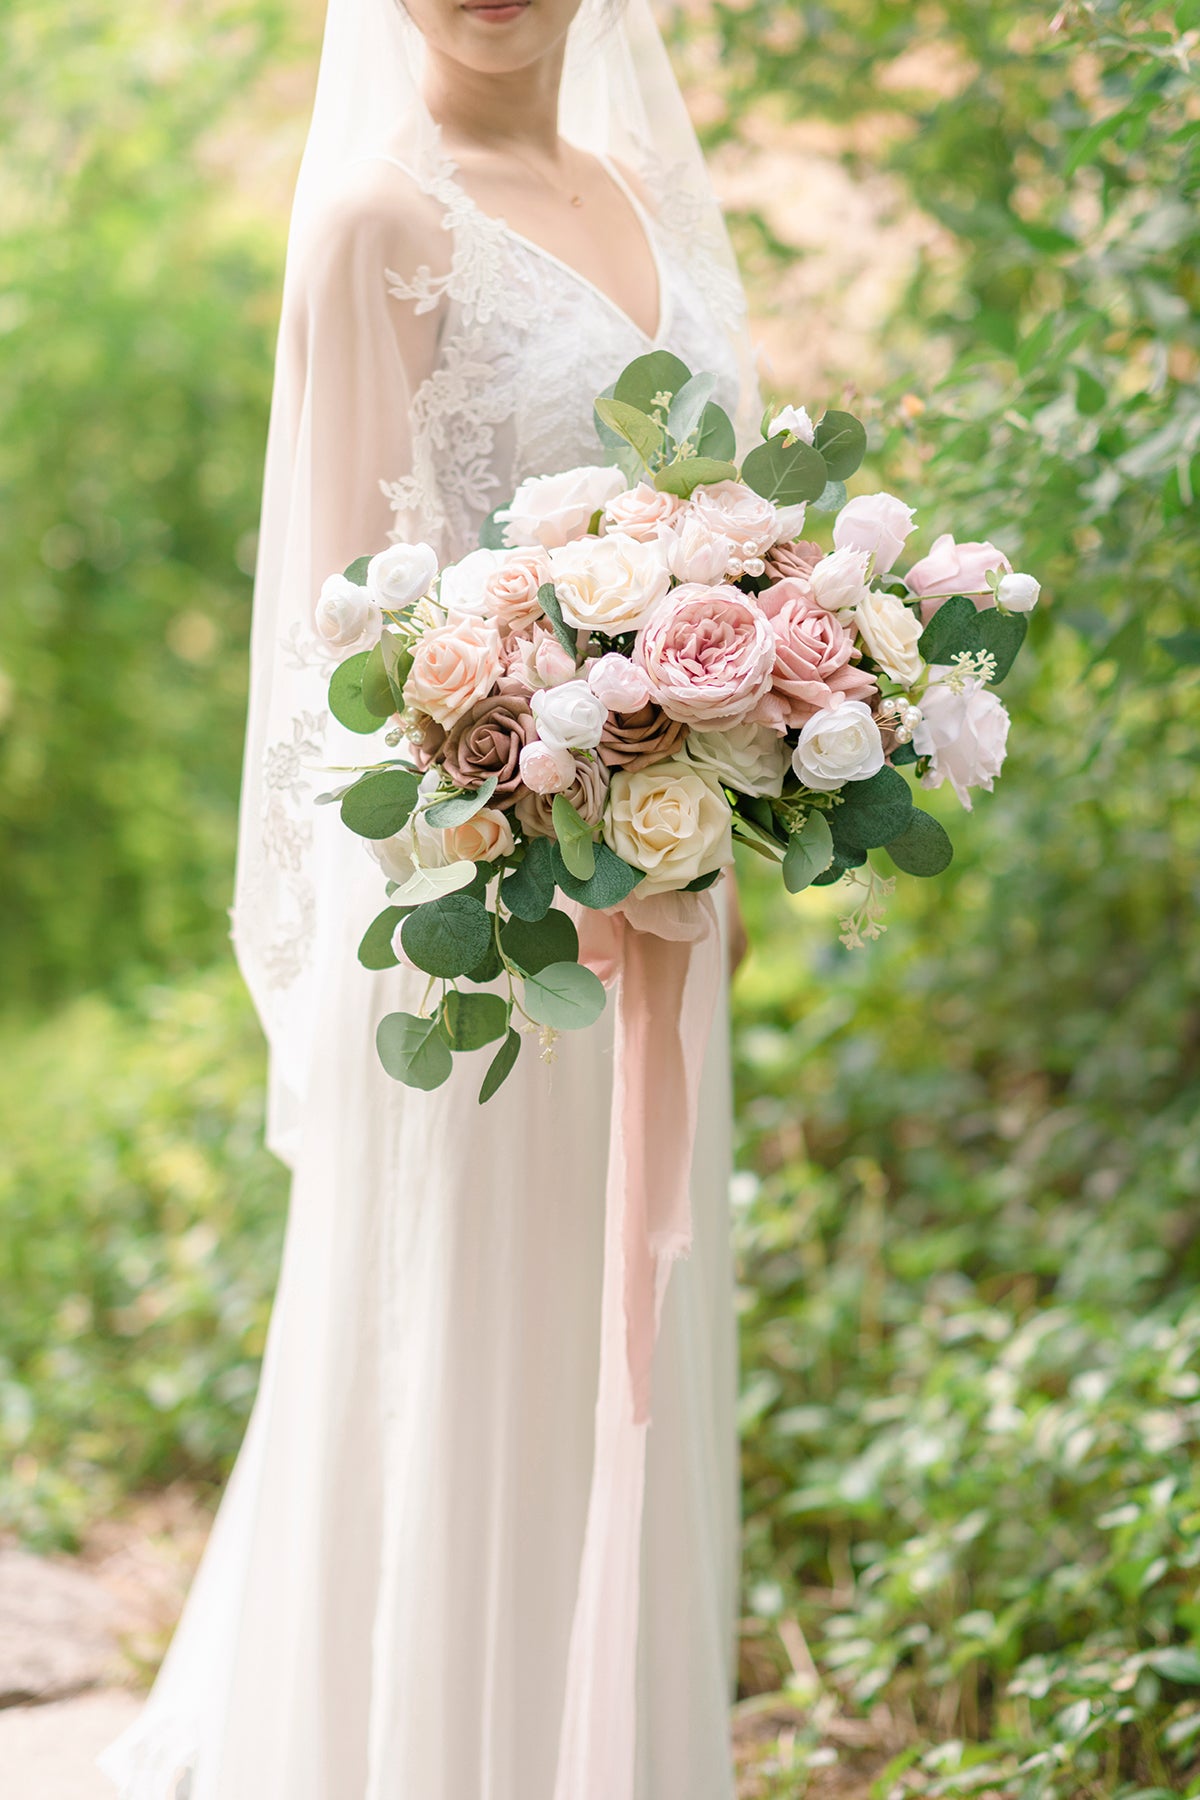 Pre-Arranged Wedding Flower Packages in Dusty Rose & Cream